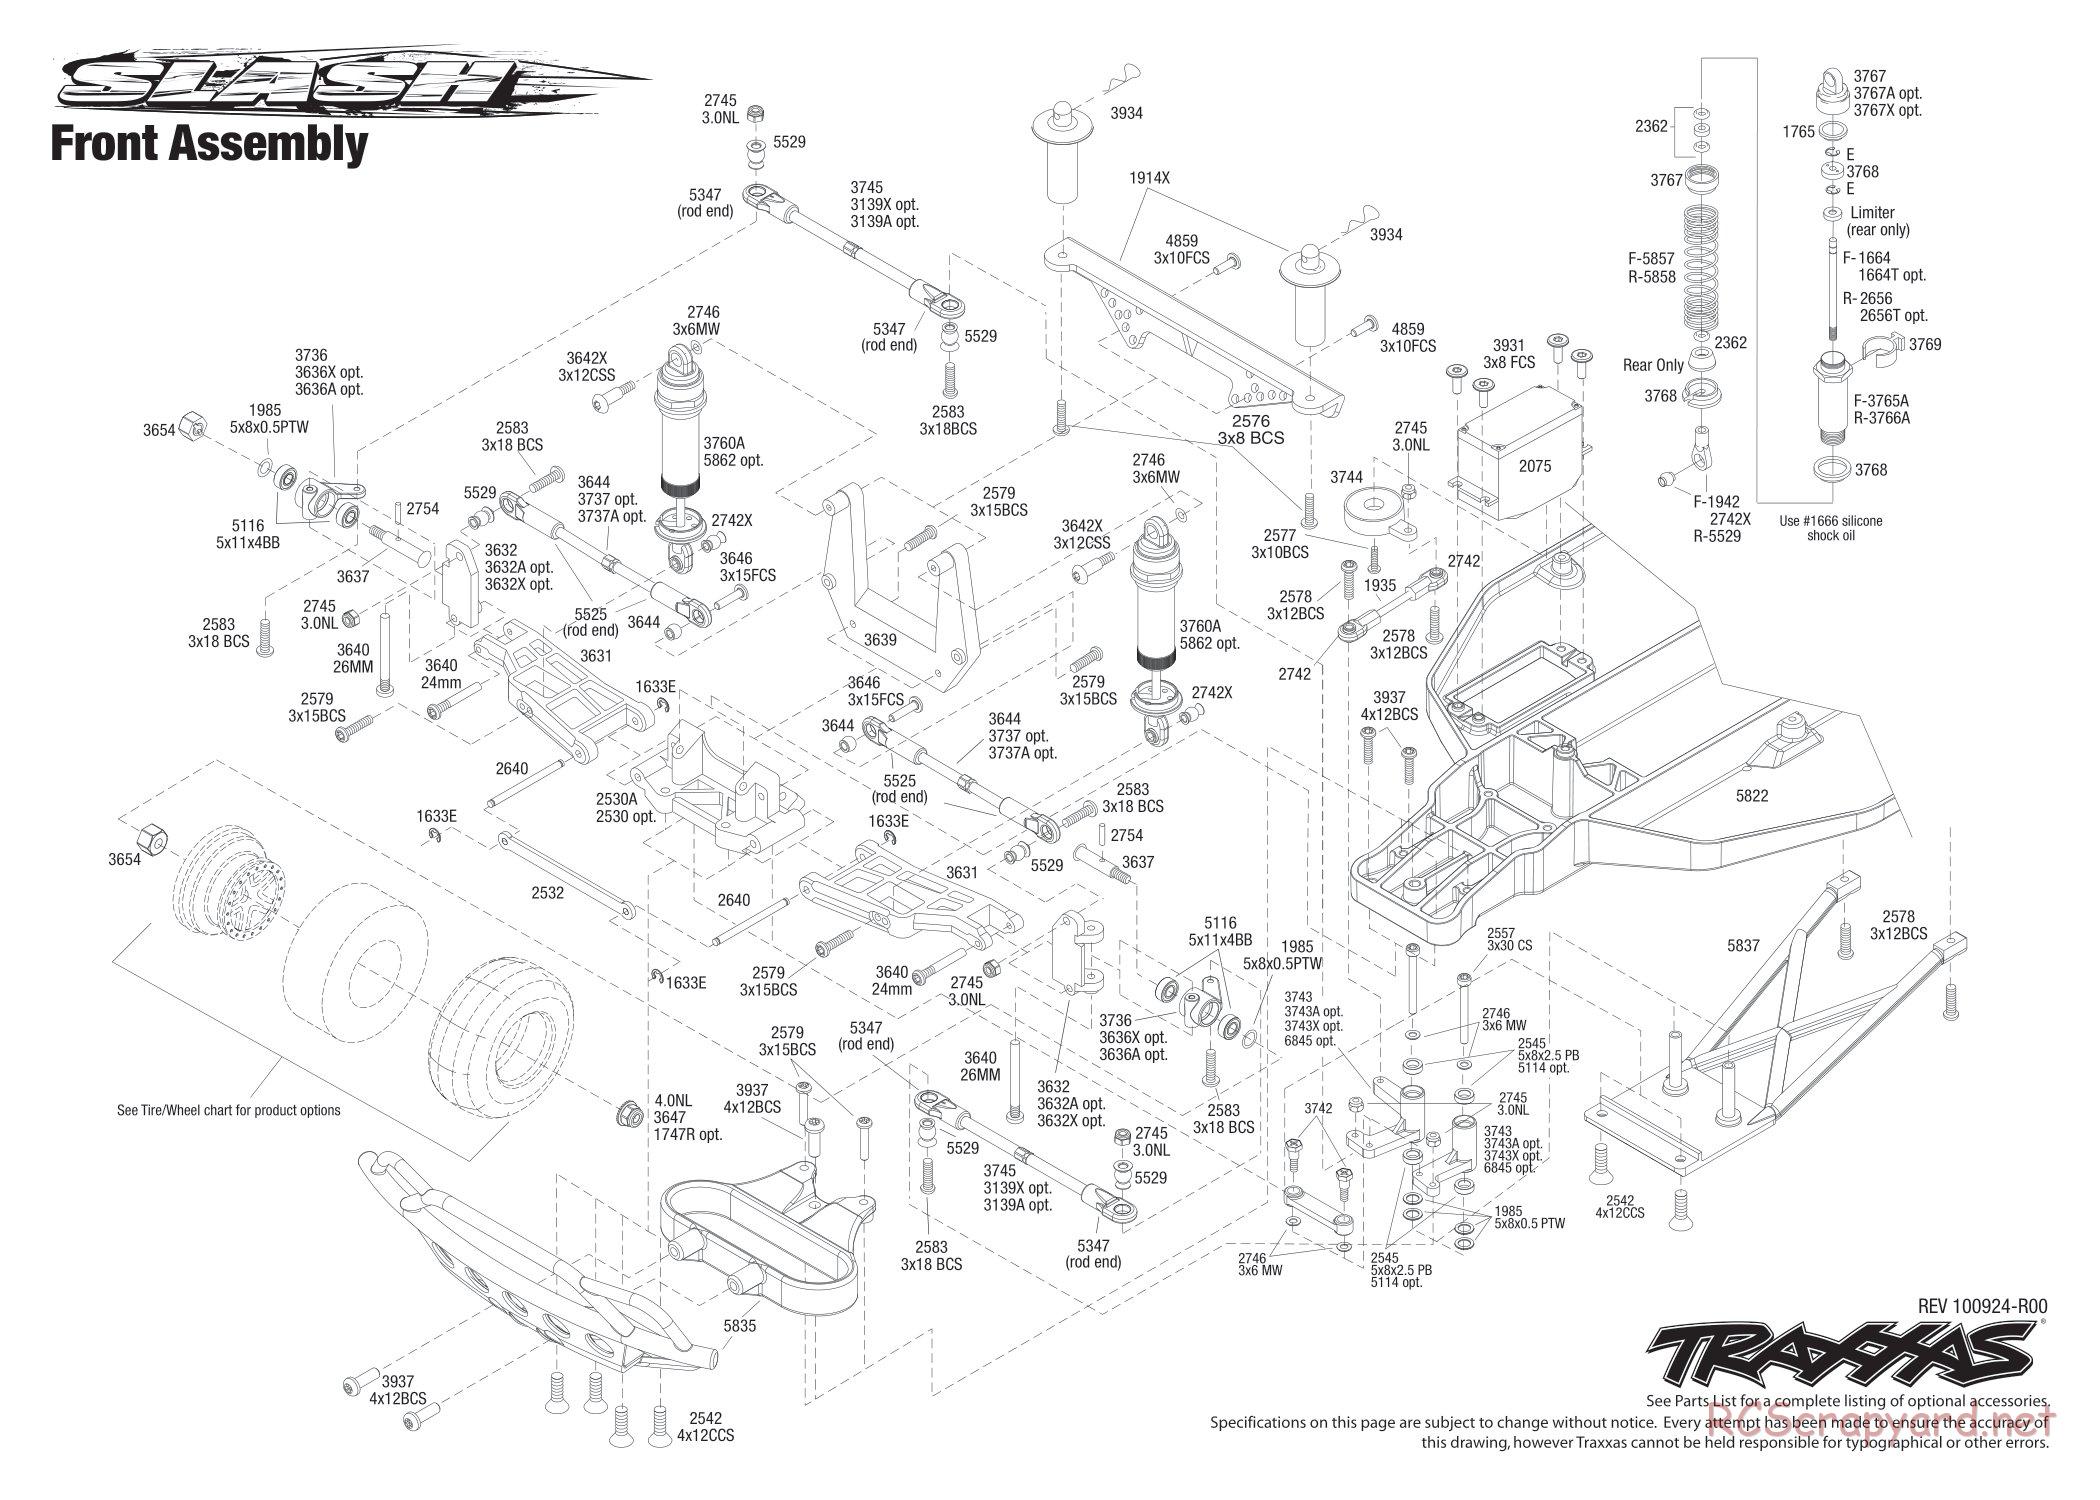 Traxxas - Slash 2WD (2011) - Exploded Views - Page 1